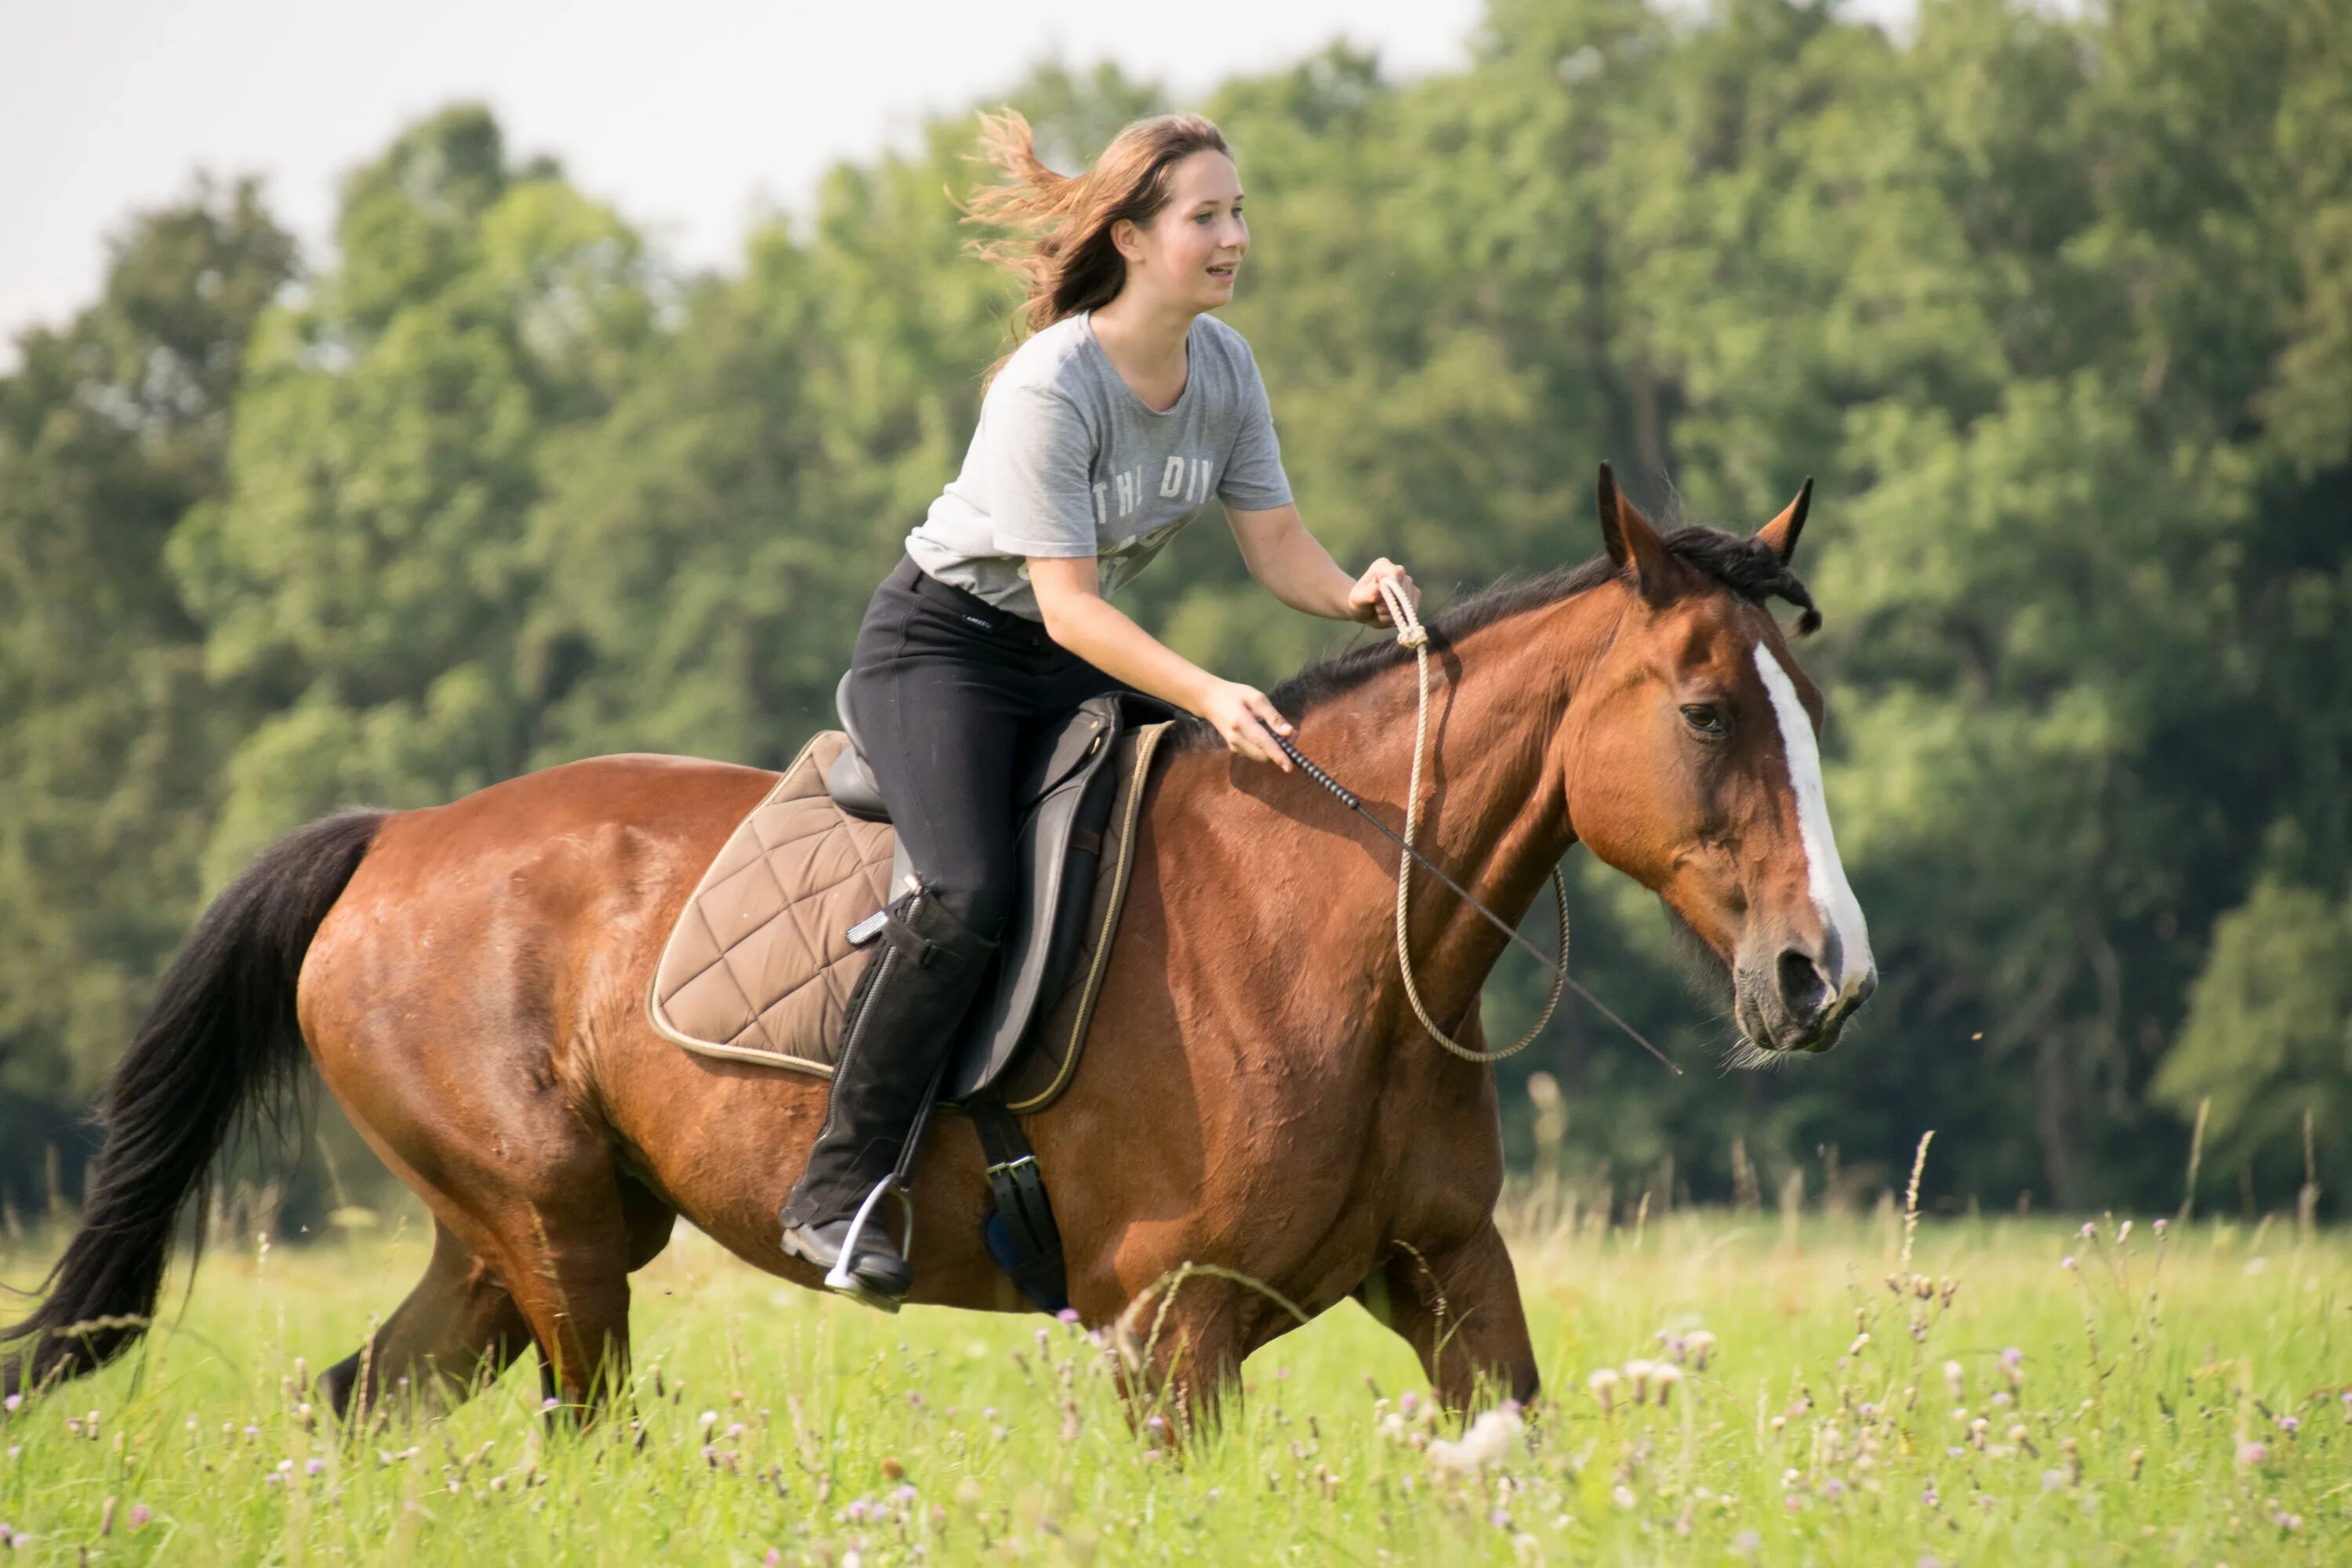 Animal ride. Лошадь сидит. Девушка сидит на коне. Человек на лошади. Девушка сидит на лошади.